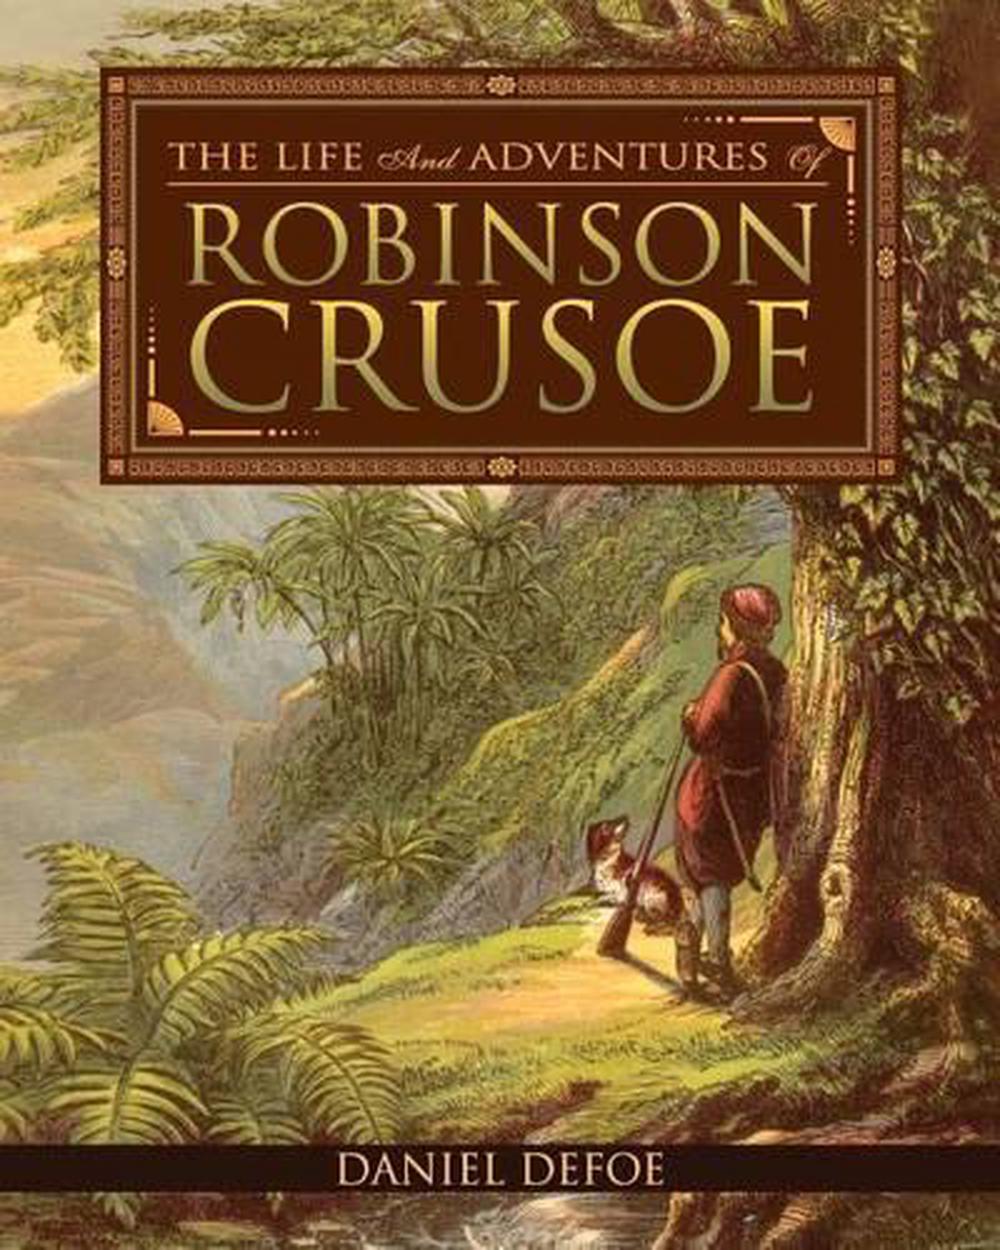 Робинзон крузо 10. Defoe Daniel "Robinson Crusoe". Life and Adventures of Robinson Crusoe. Книга Robinson Crusoe. Робинзон Крузо обложка книги.